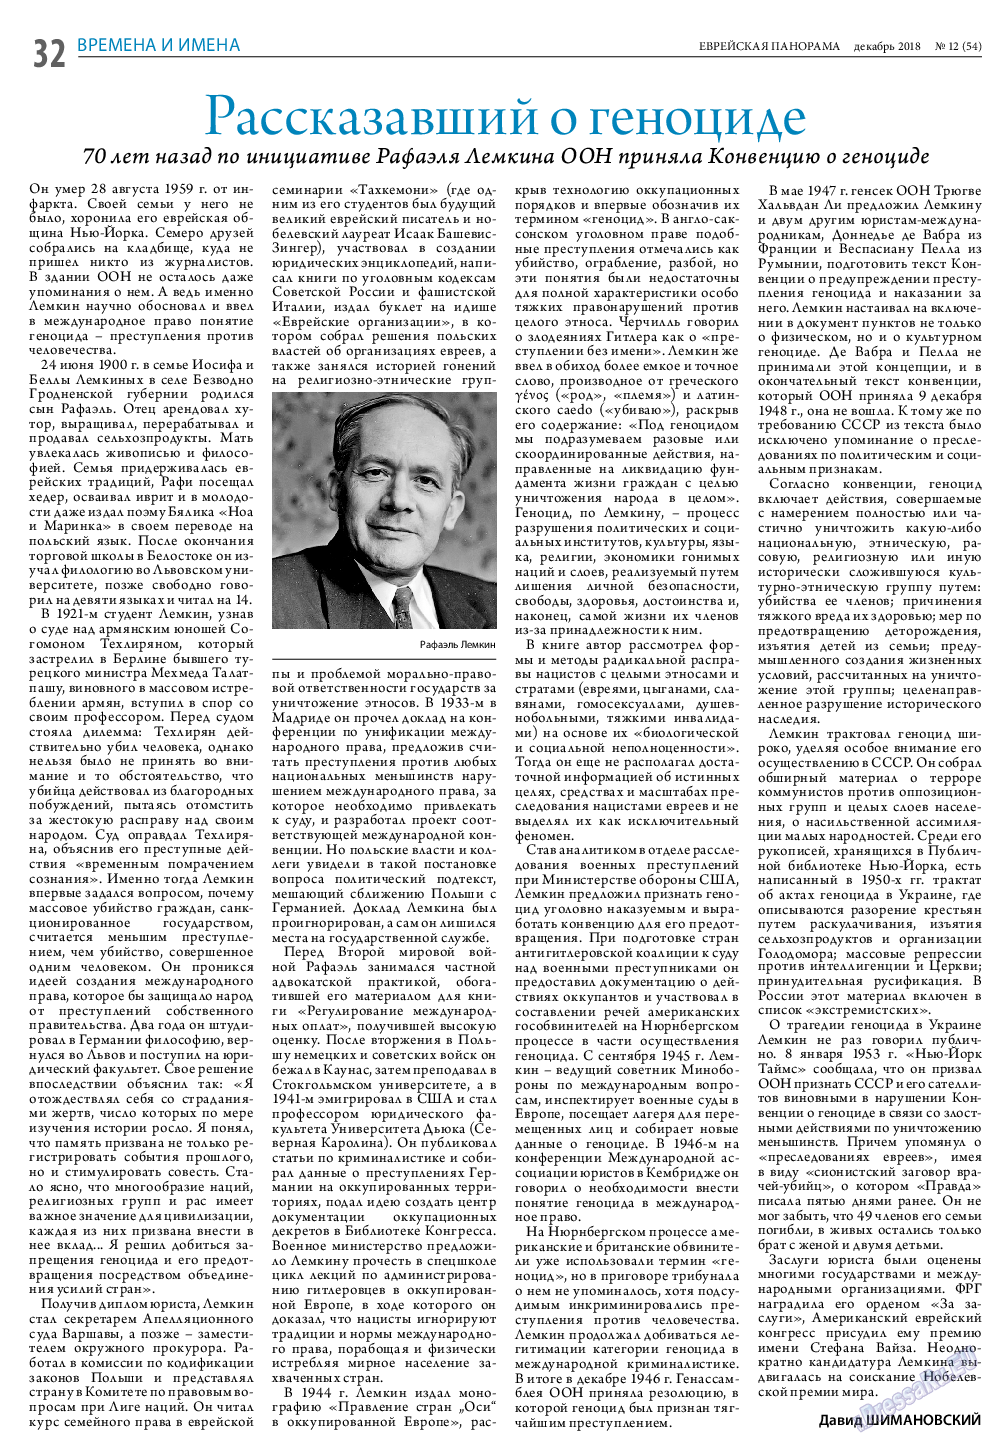 Еврейская панорама, газета. 2018 №12 стр.32